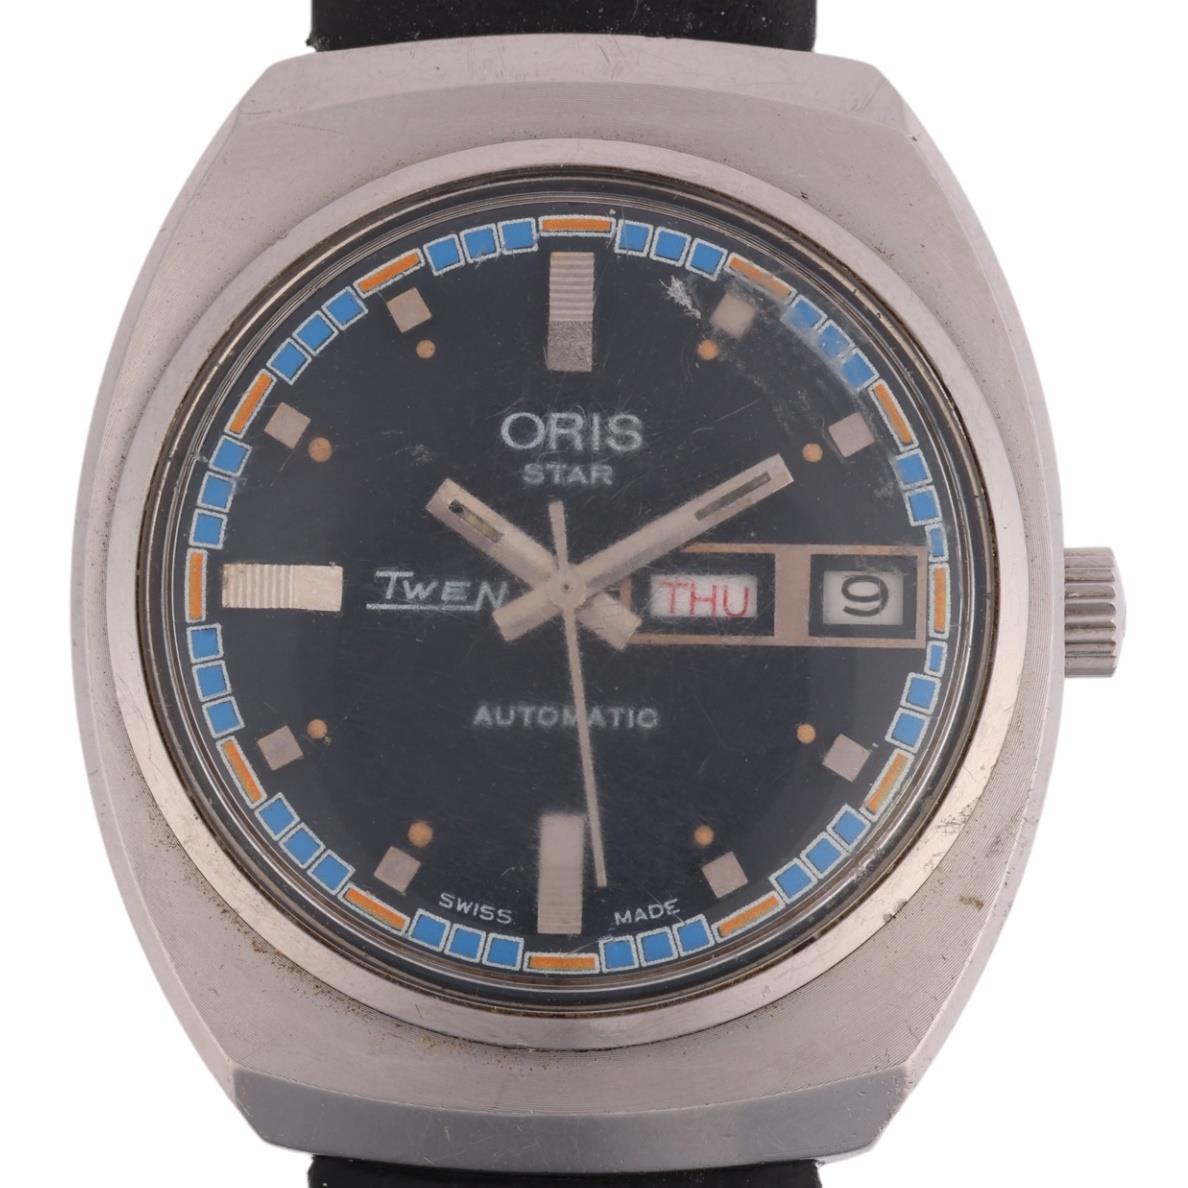 ORIS - a Vintage stainless steel Star Twen automatic calendar wristwatch, circa 1970s, blue dial